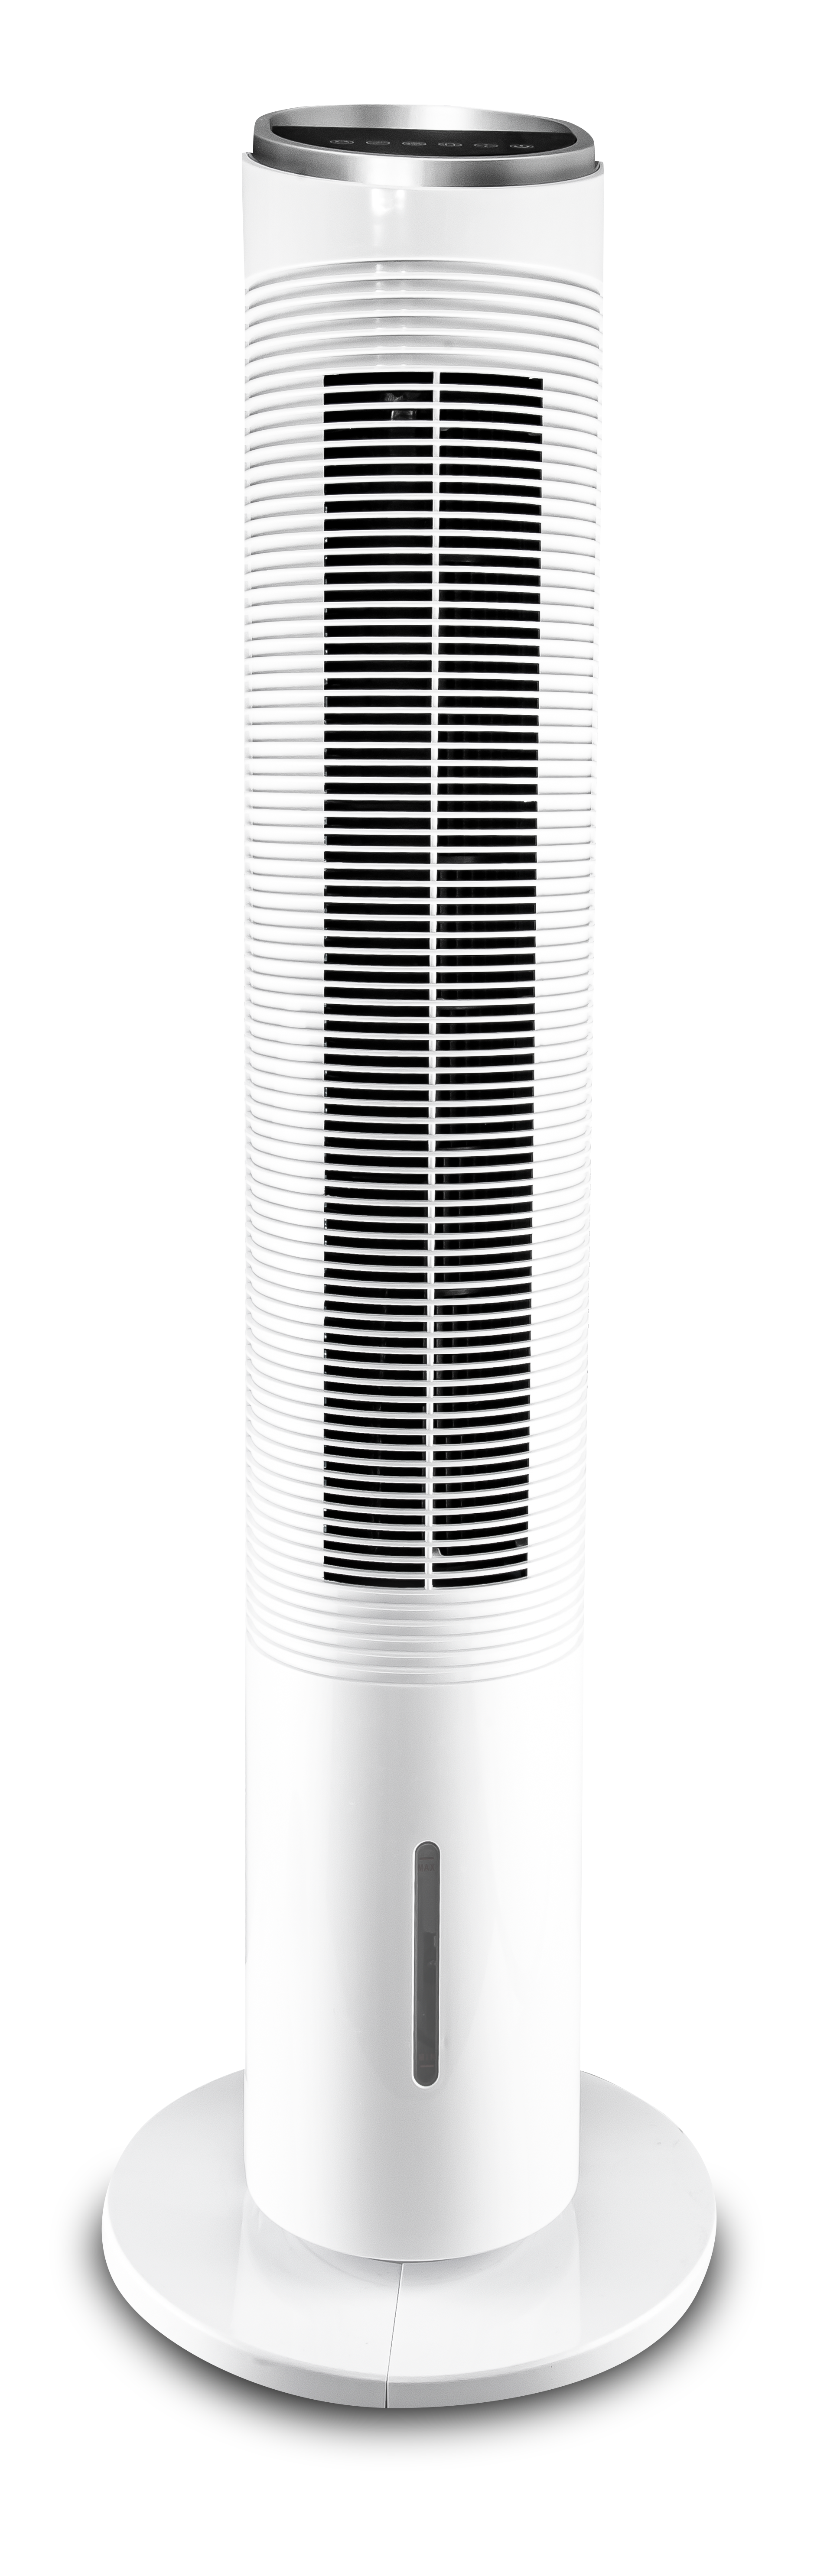 Watt) 6020 KOENIC Luftkühler Turmventilator, Weiß KTFC 2IN1 (60